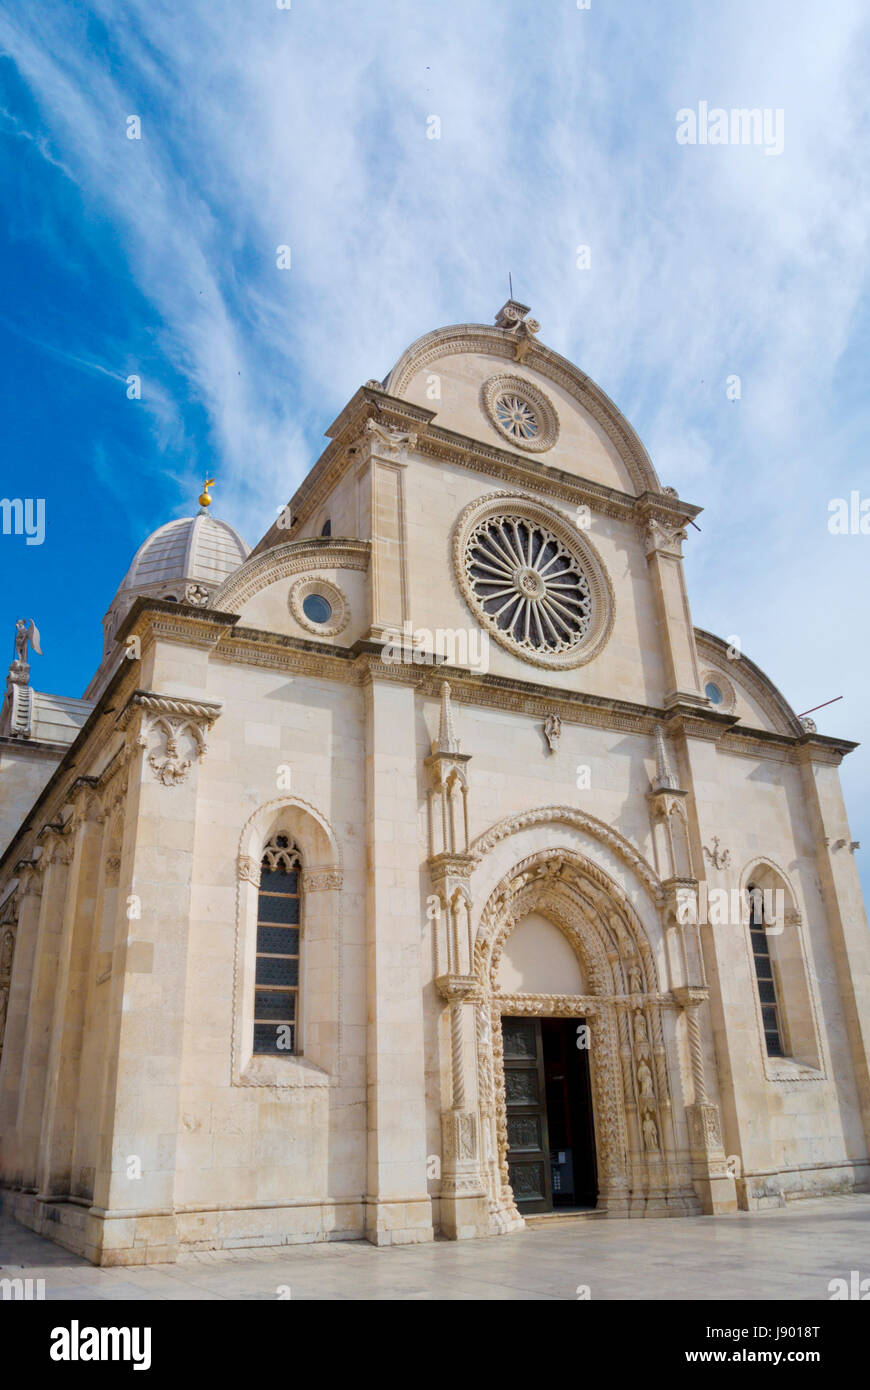 Katedrala sv Jakova, Sveti Jakov, cathedral of Saint James, Trg Republike Hrvatske, old town, Sibenik, Dalmatia, Croatia Stock Photo